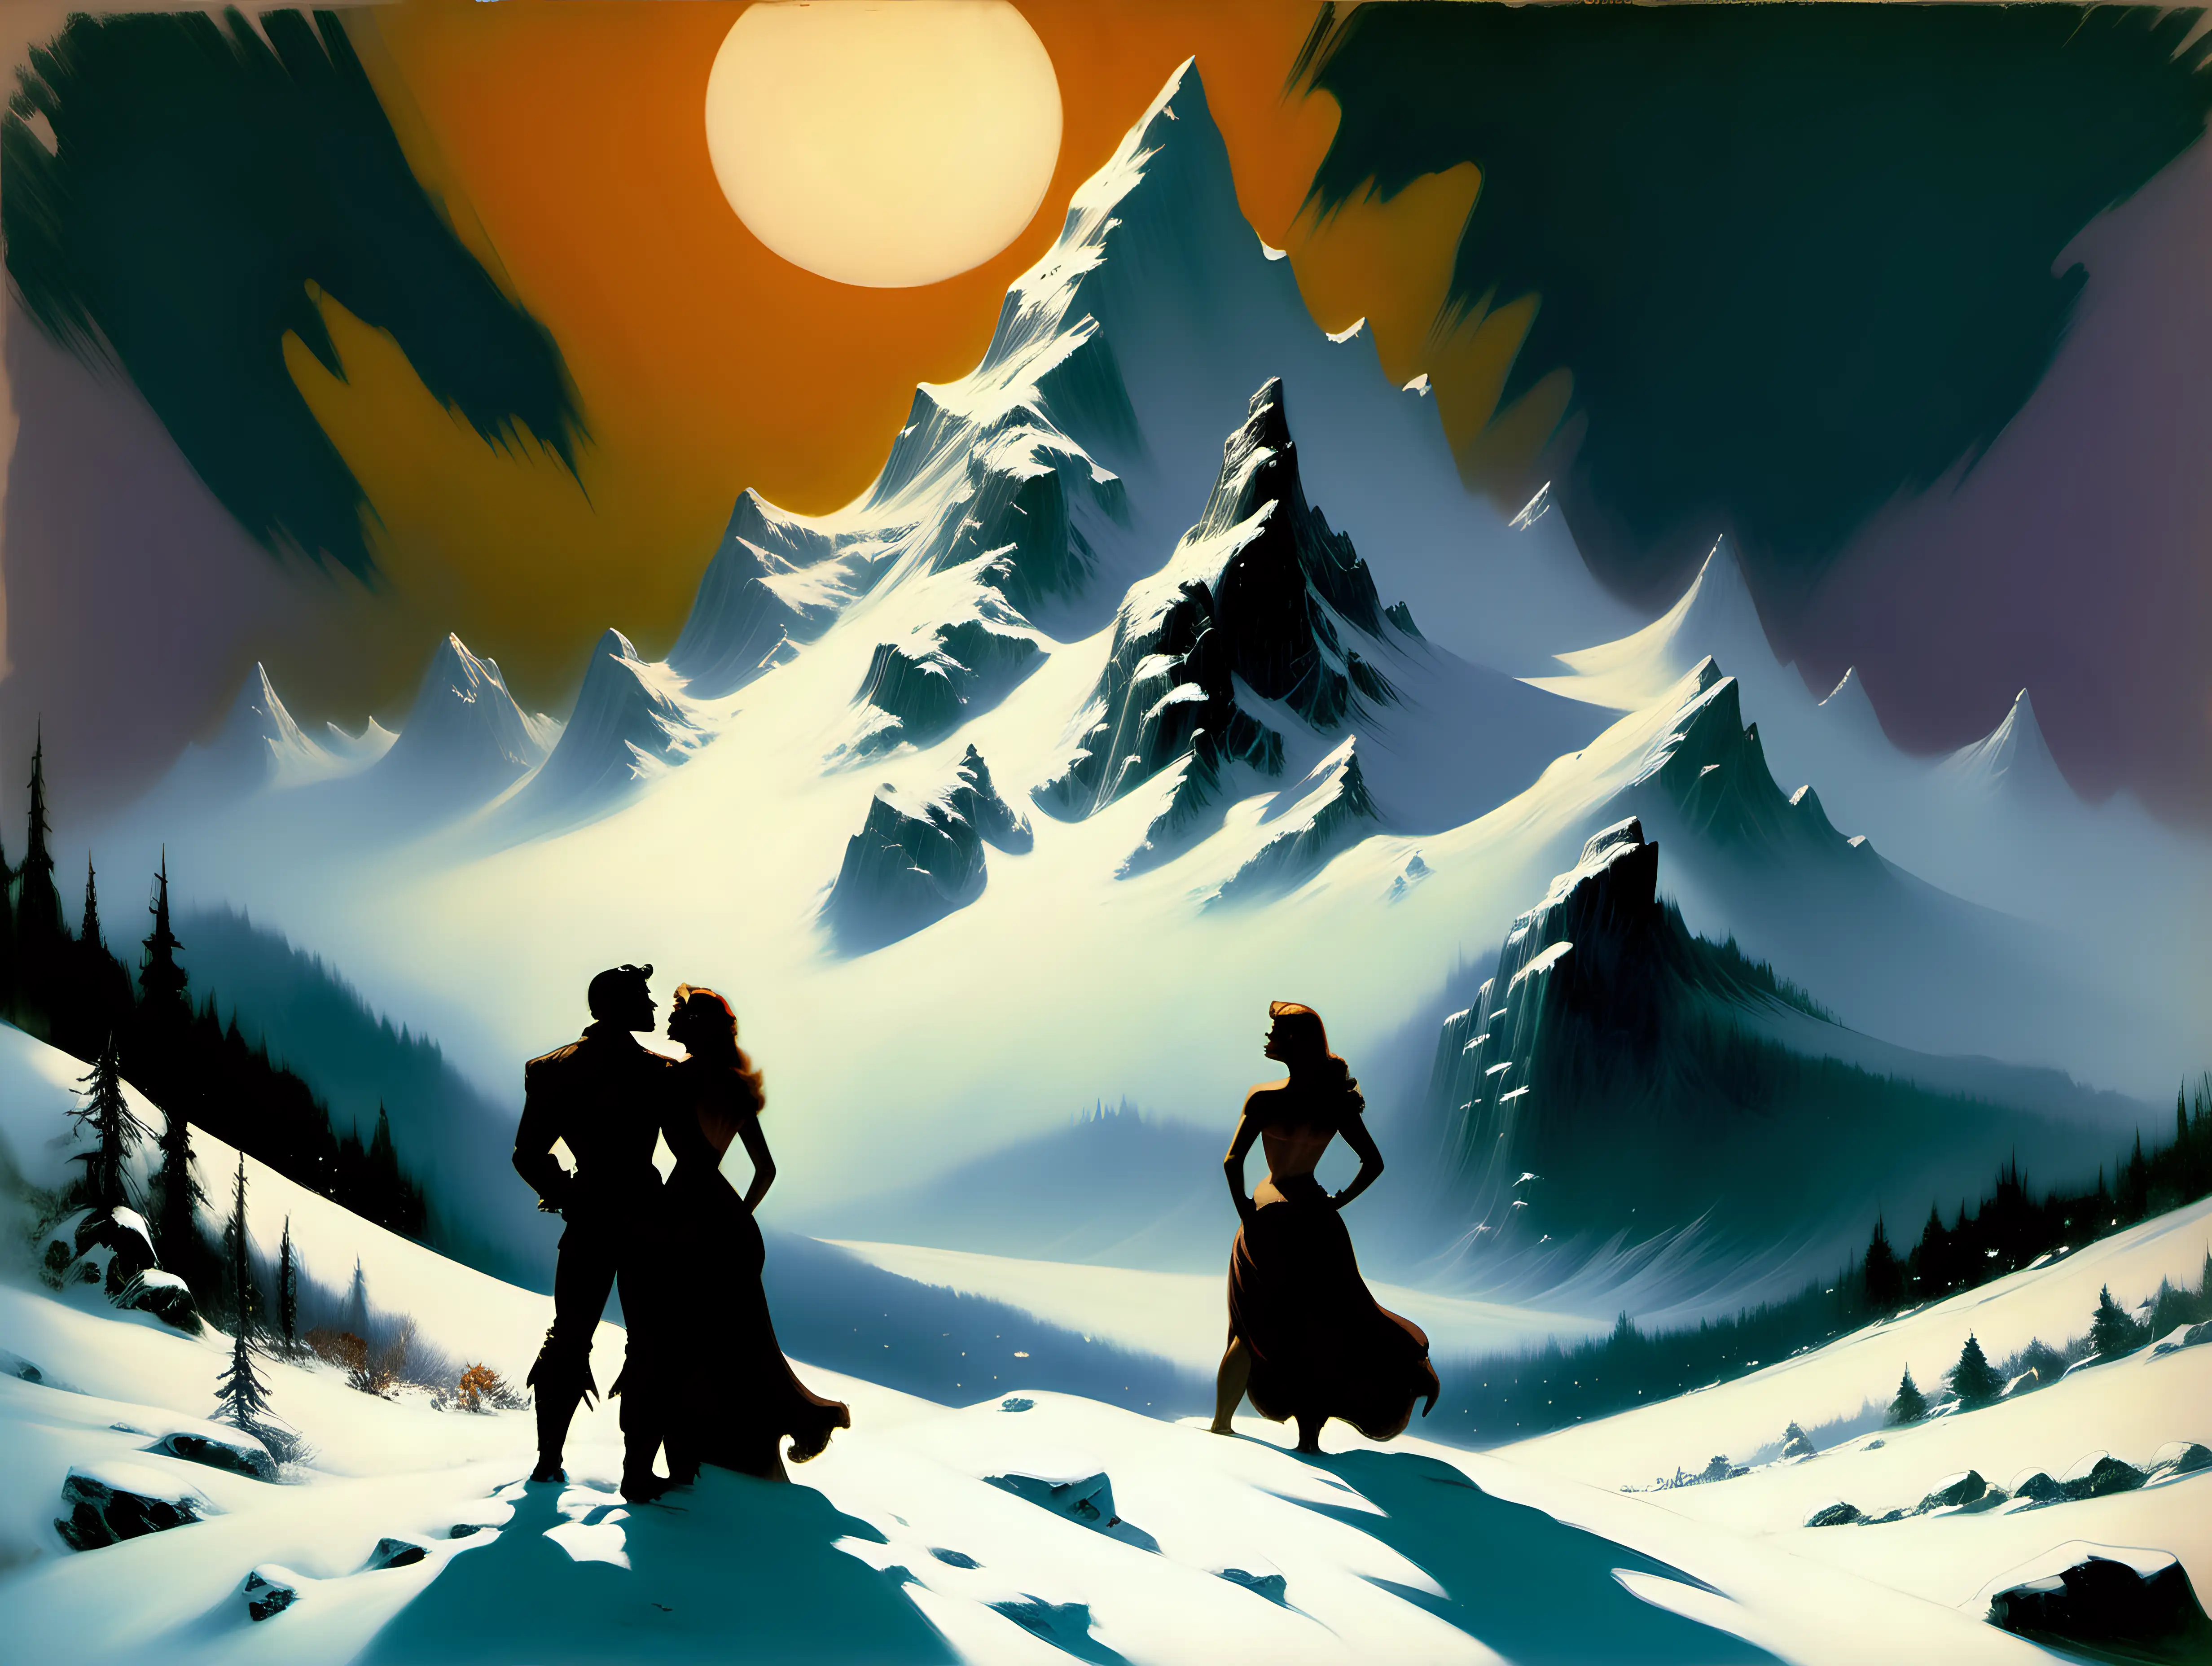 Romantic Lovers Admiring SnowCapped Mountain in Frank Frazetta Style